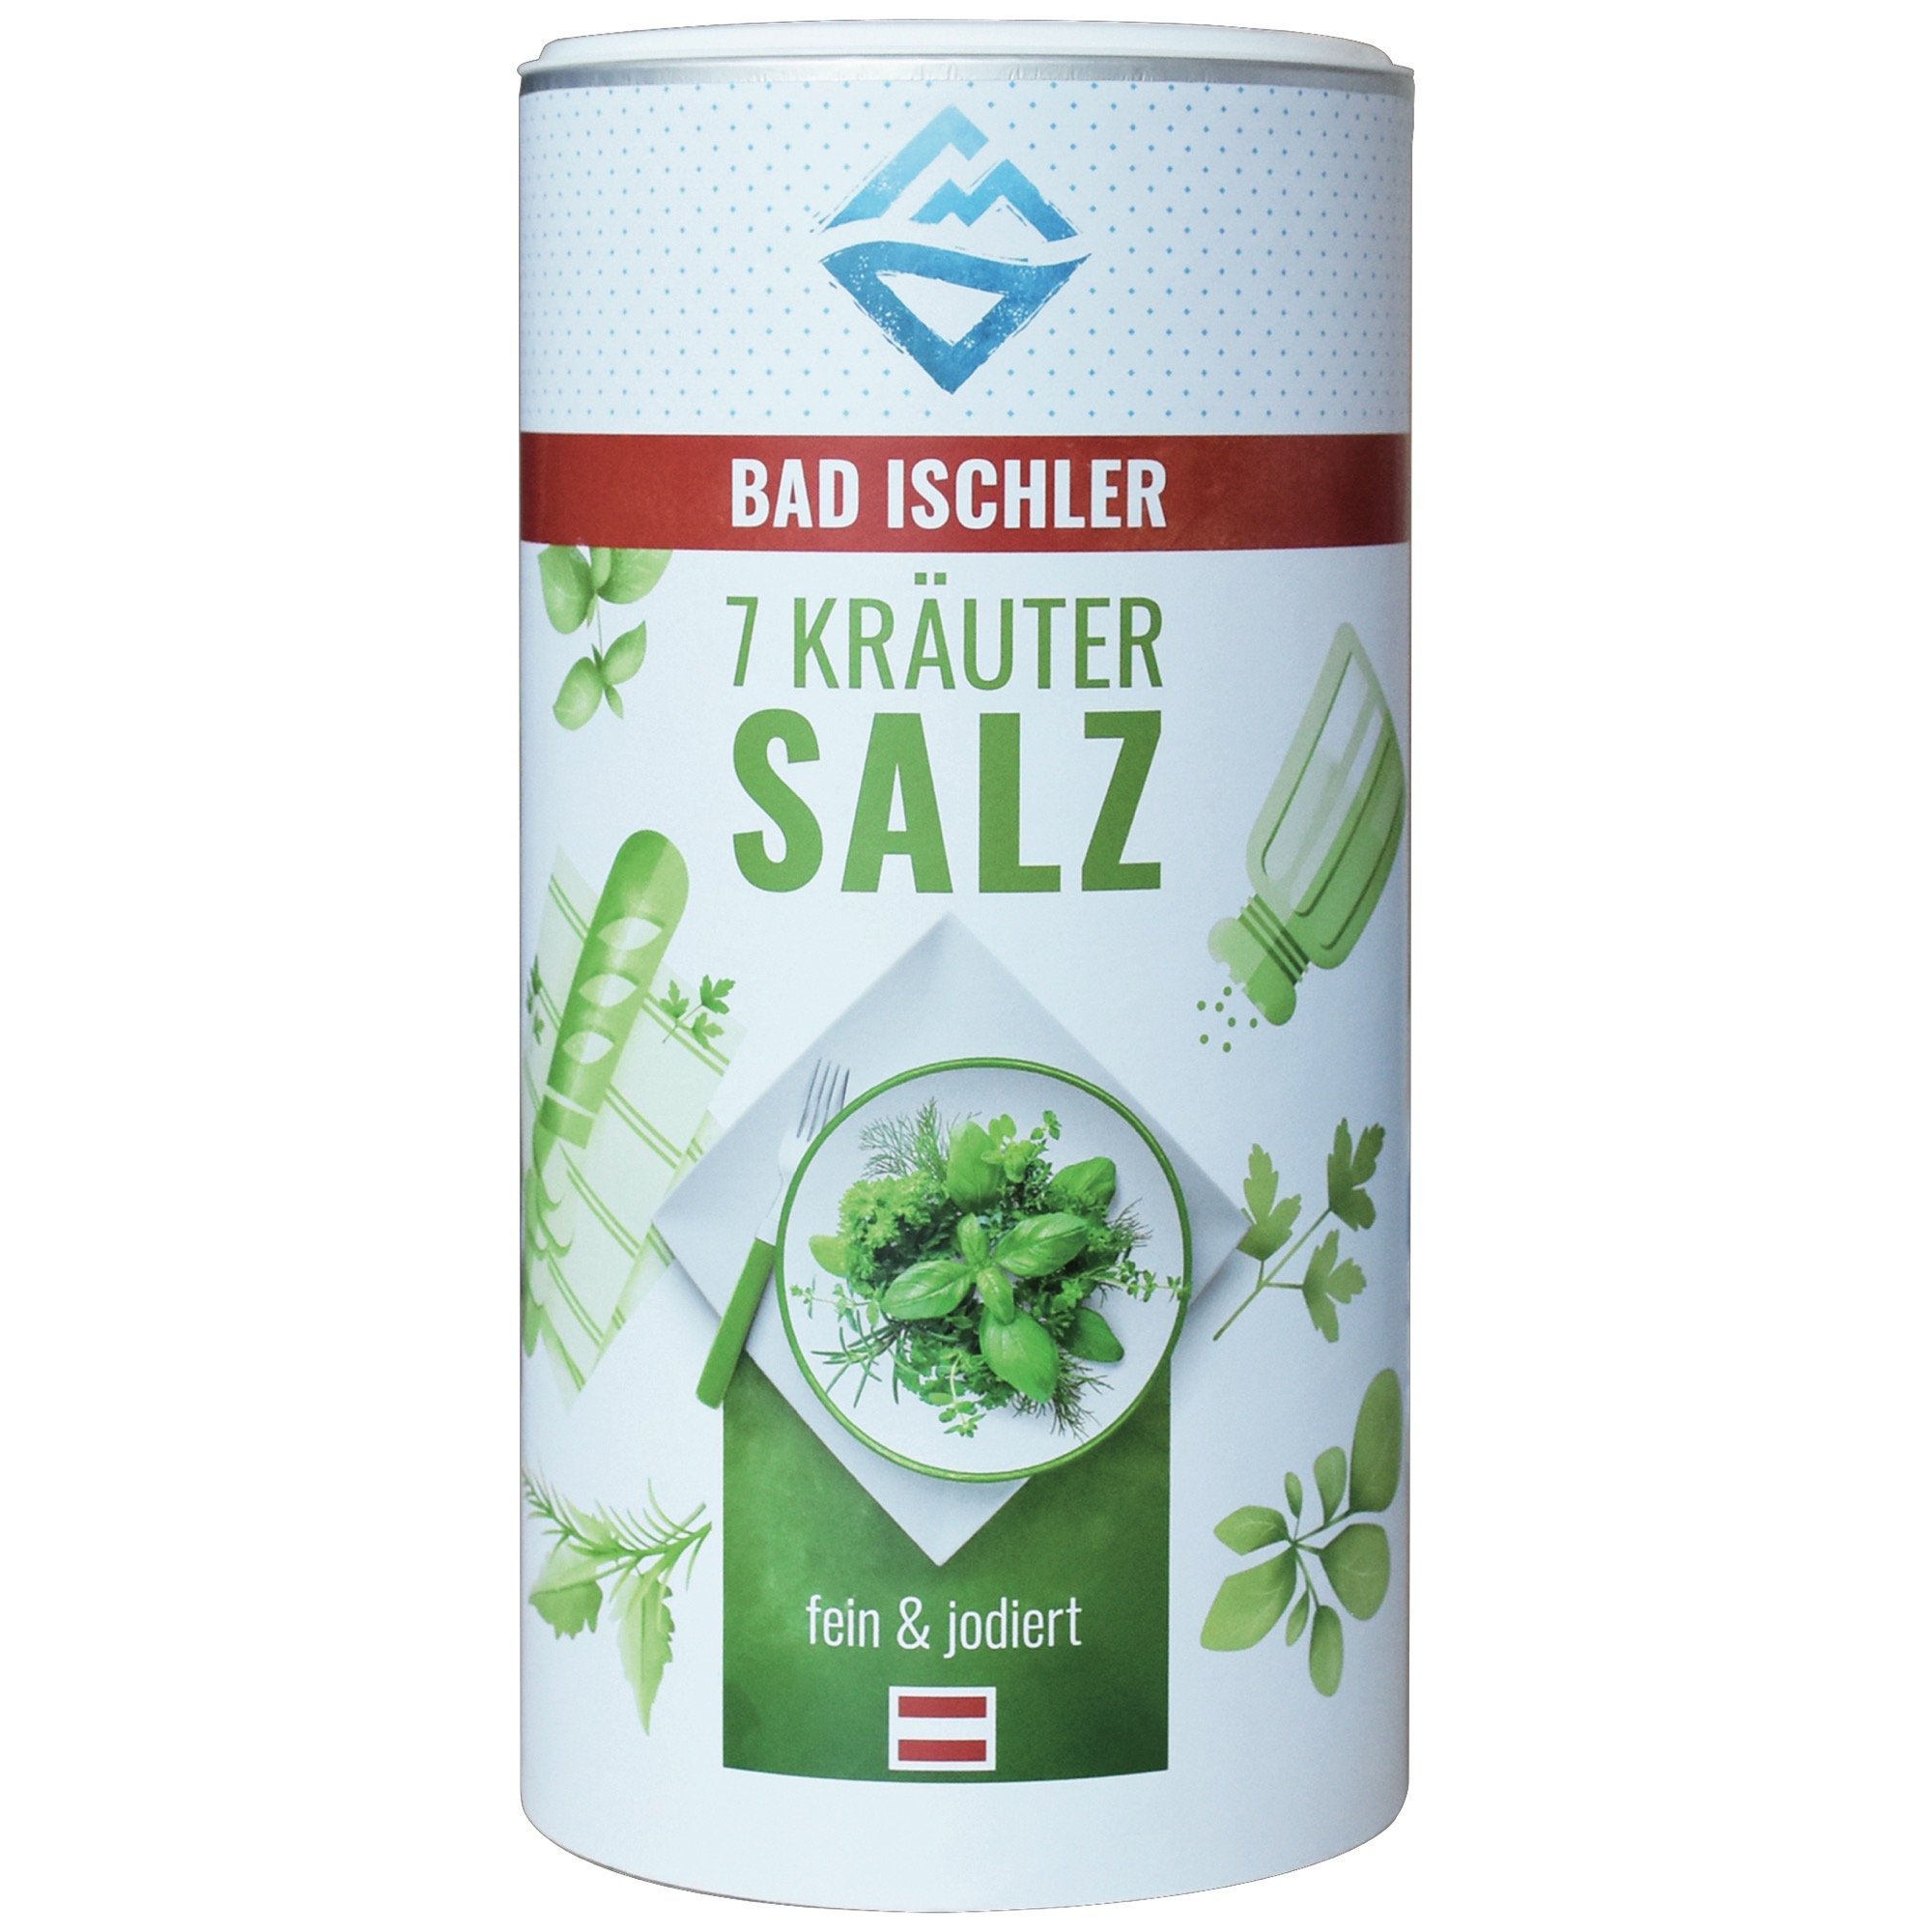 Bad Ischler 7 bylín soľ jodid. 1kg